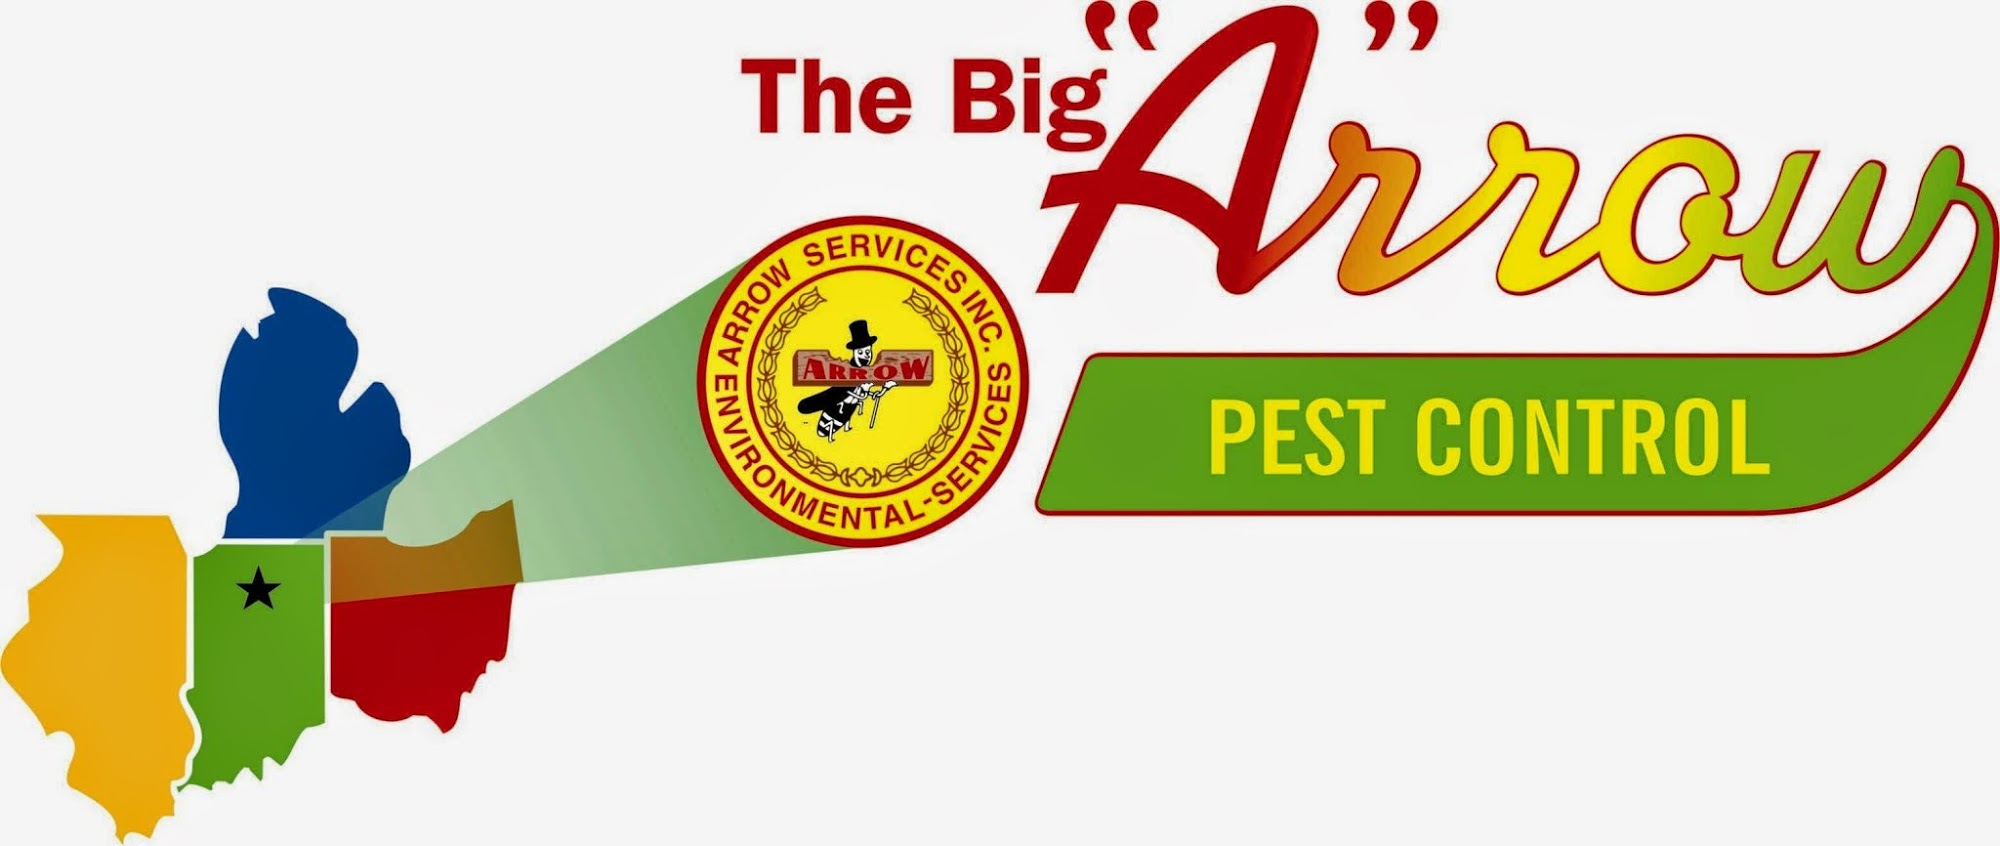 Arrow Pest Control Services Merrillville